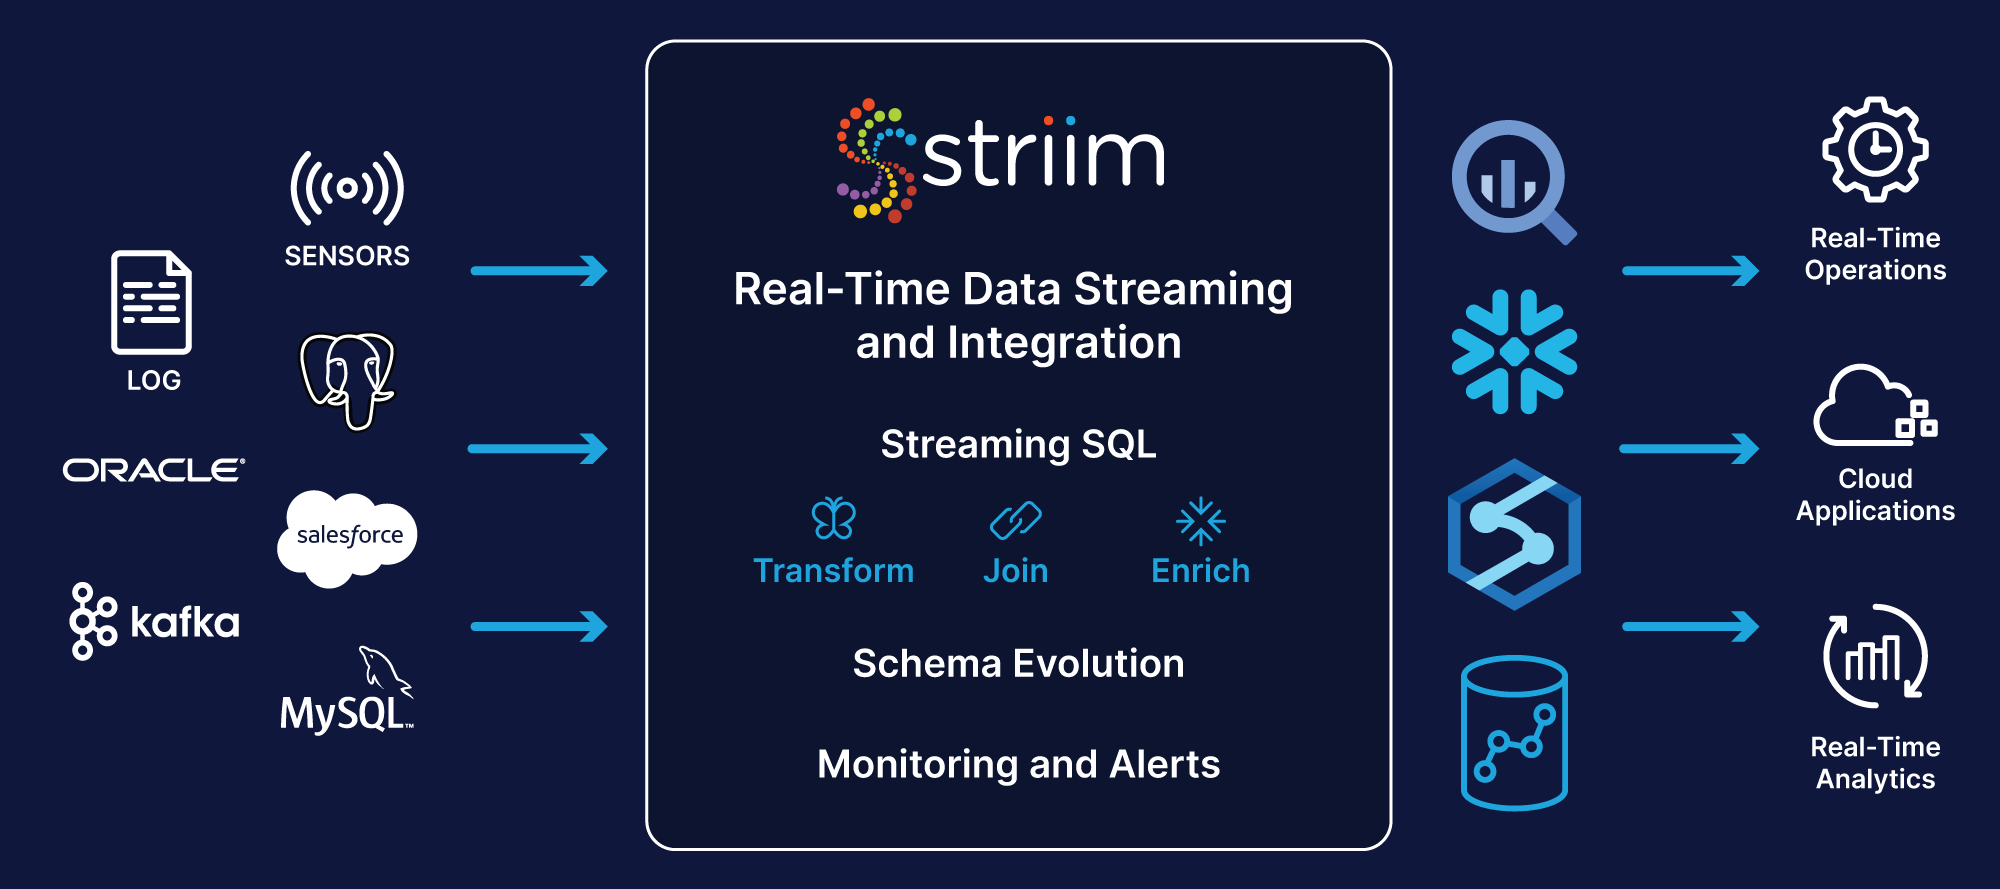 Striim for real-time data integration